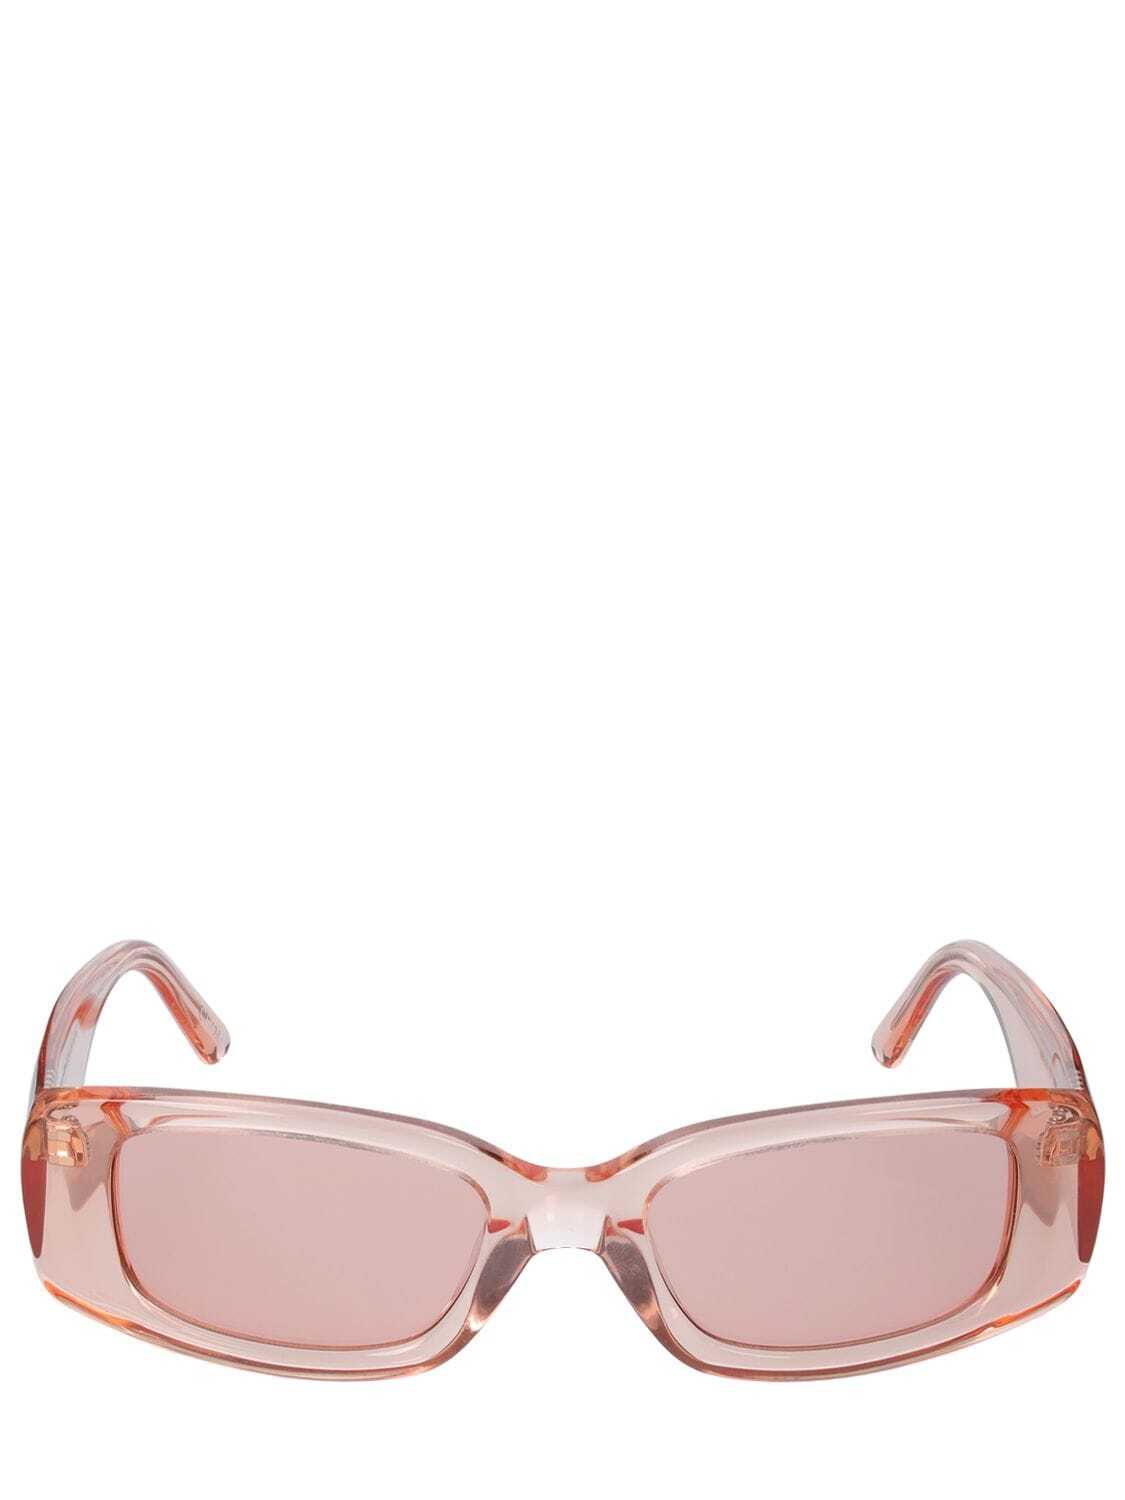 CHIMI 10.2 Squared Acetate Sunglasses in pink